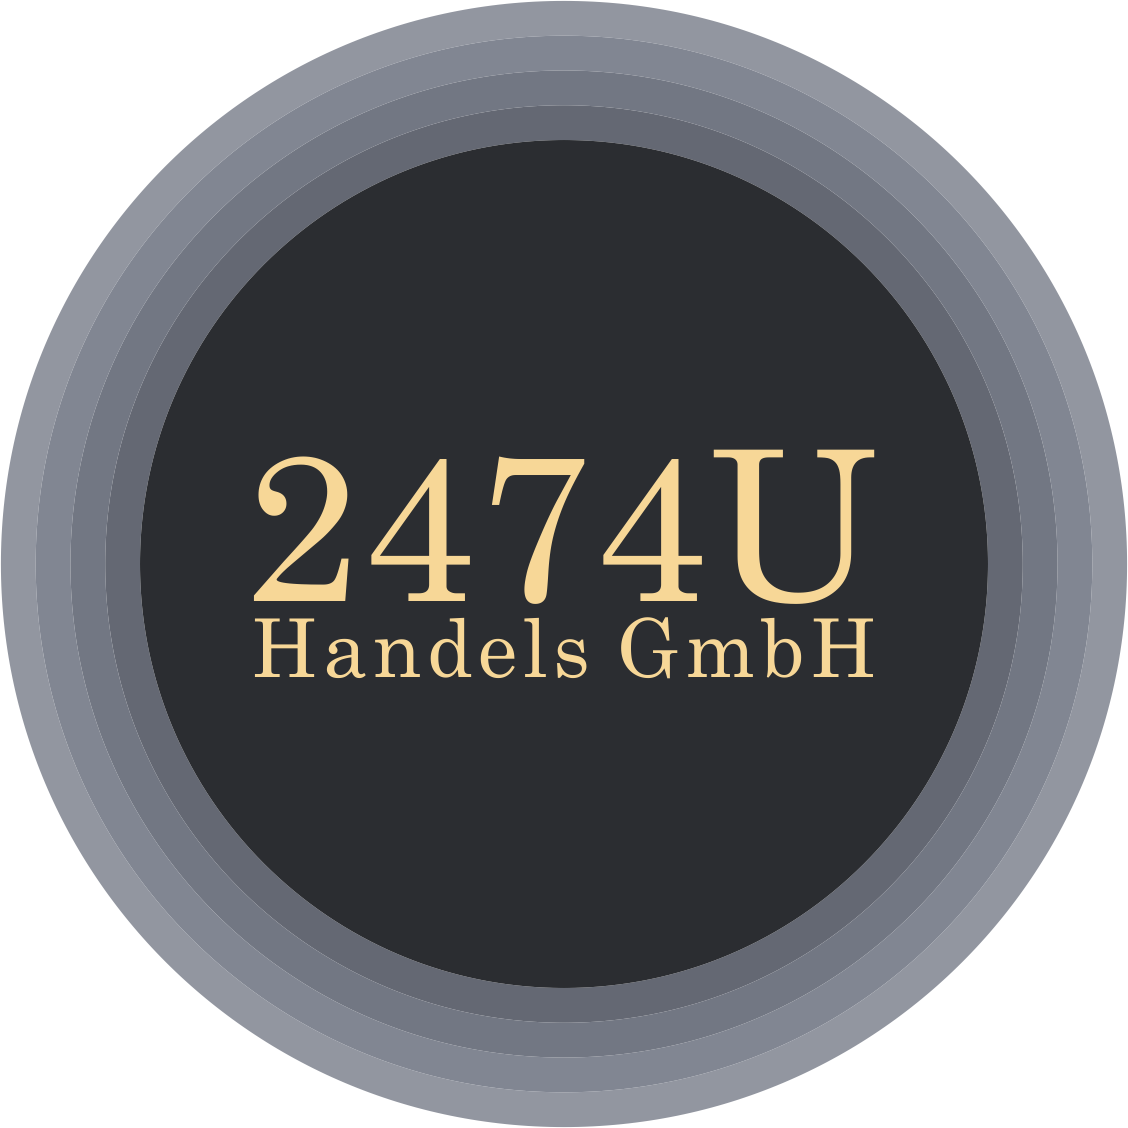 2474U Handels GmbH